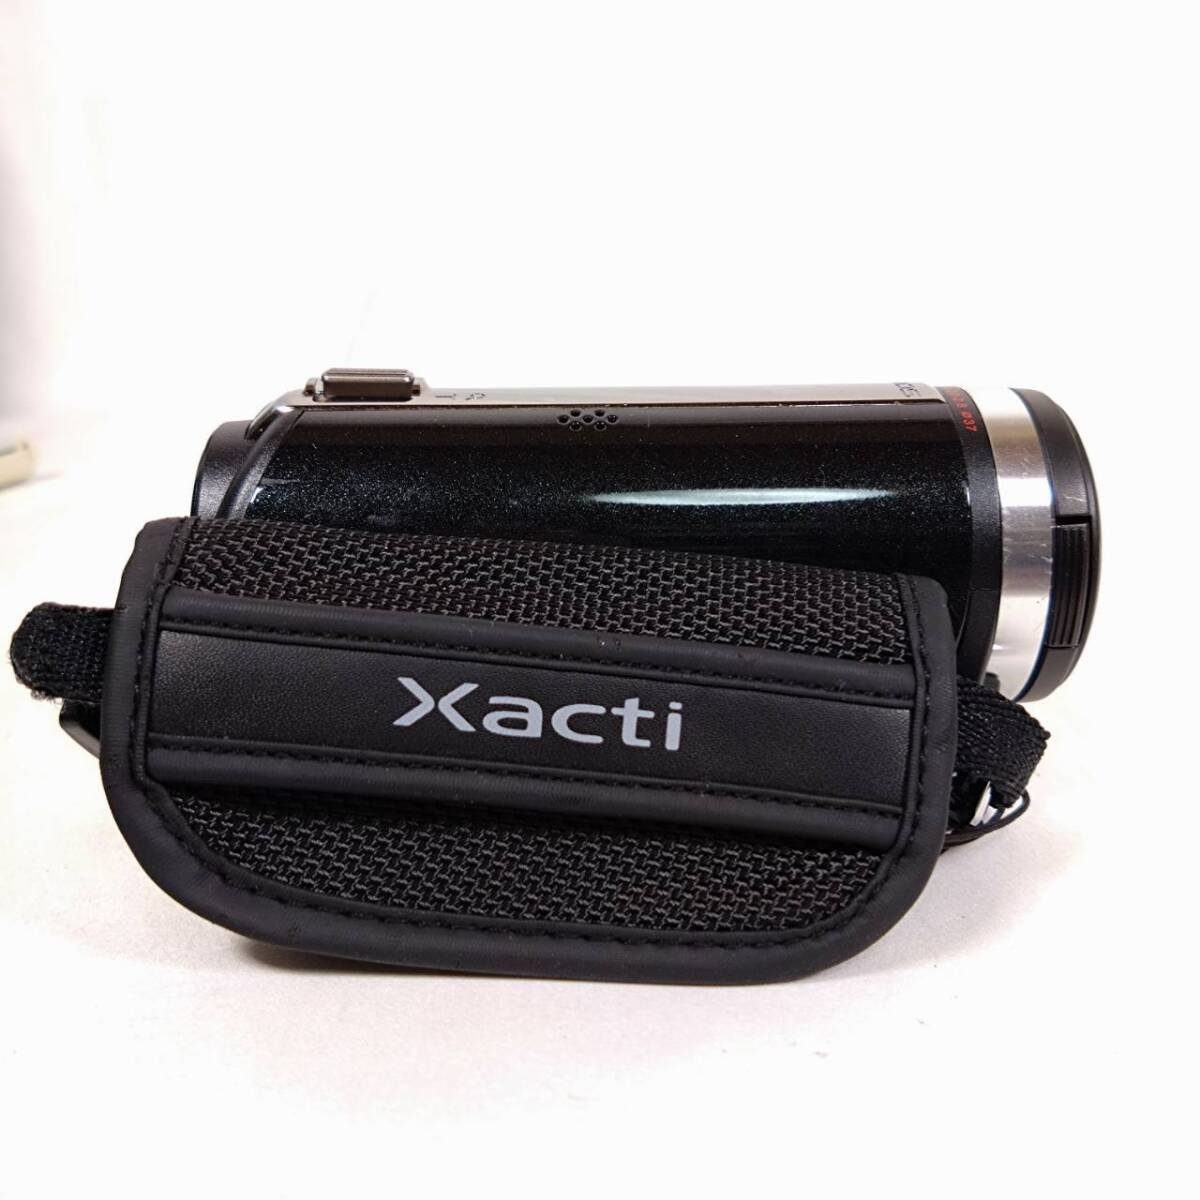 K) SANYO Sanyo Xacti DMX-FH11 черный цифровая видео камера цифровая камера инструкция электризация проверка settled D1902